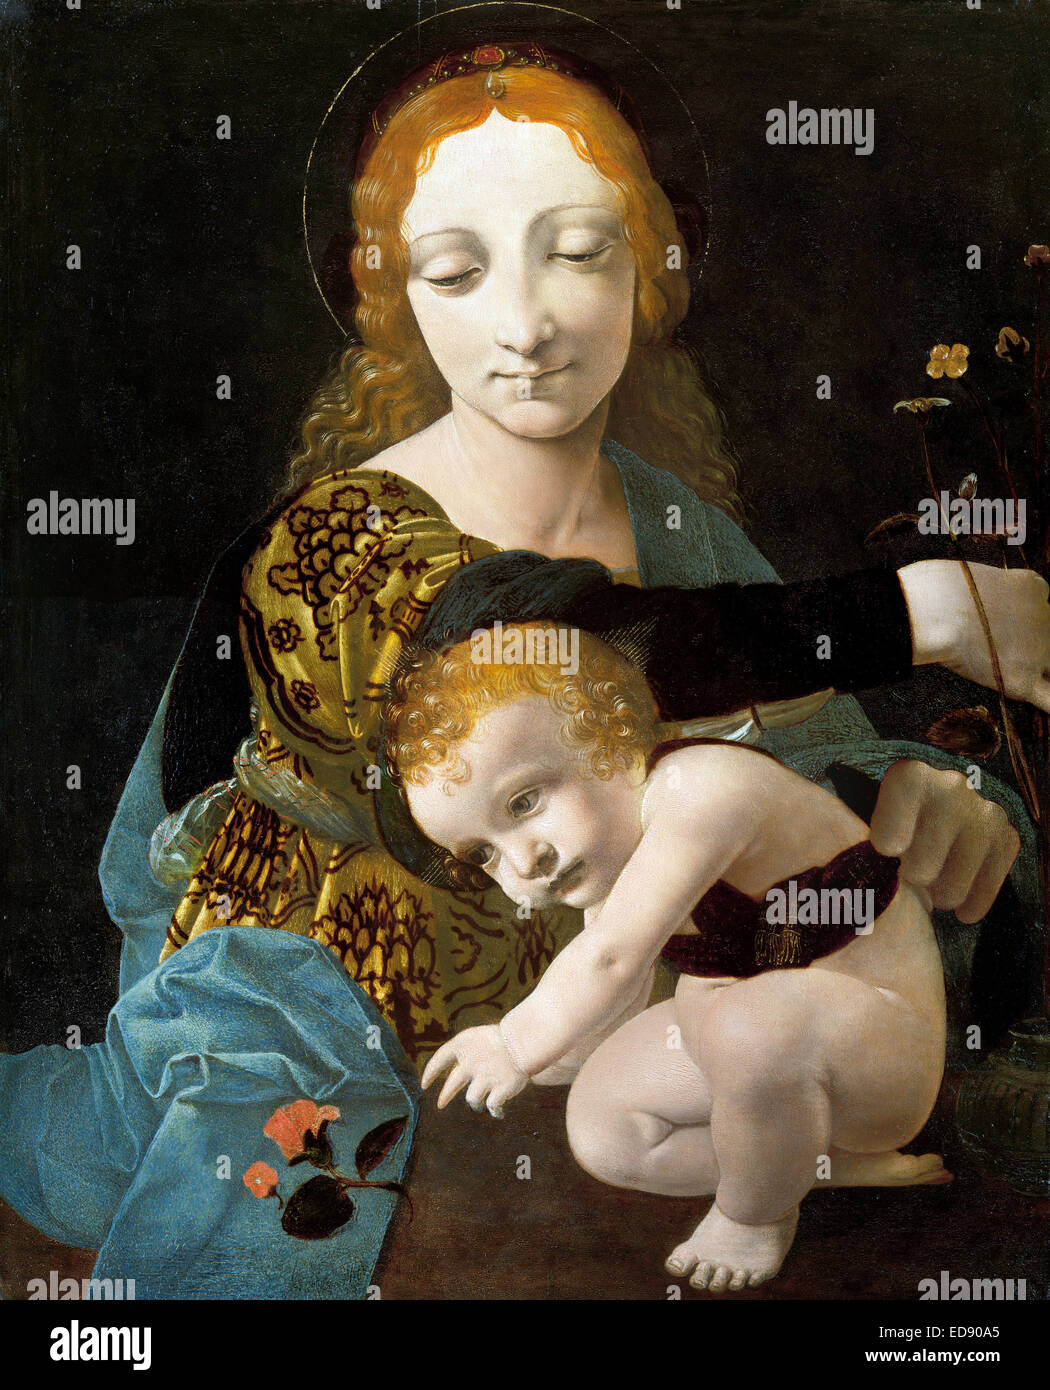 Giovanni Antonio Boltraffio, The Virgin and Child (The Madonna of the Rose) 1480 Panel. Museo Poldi Pezzoli, Milan, Italy. Stock Photo